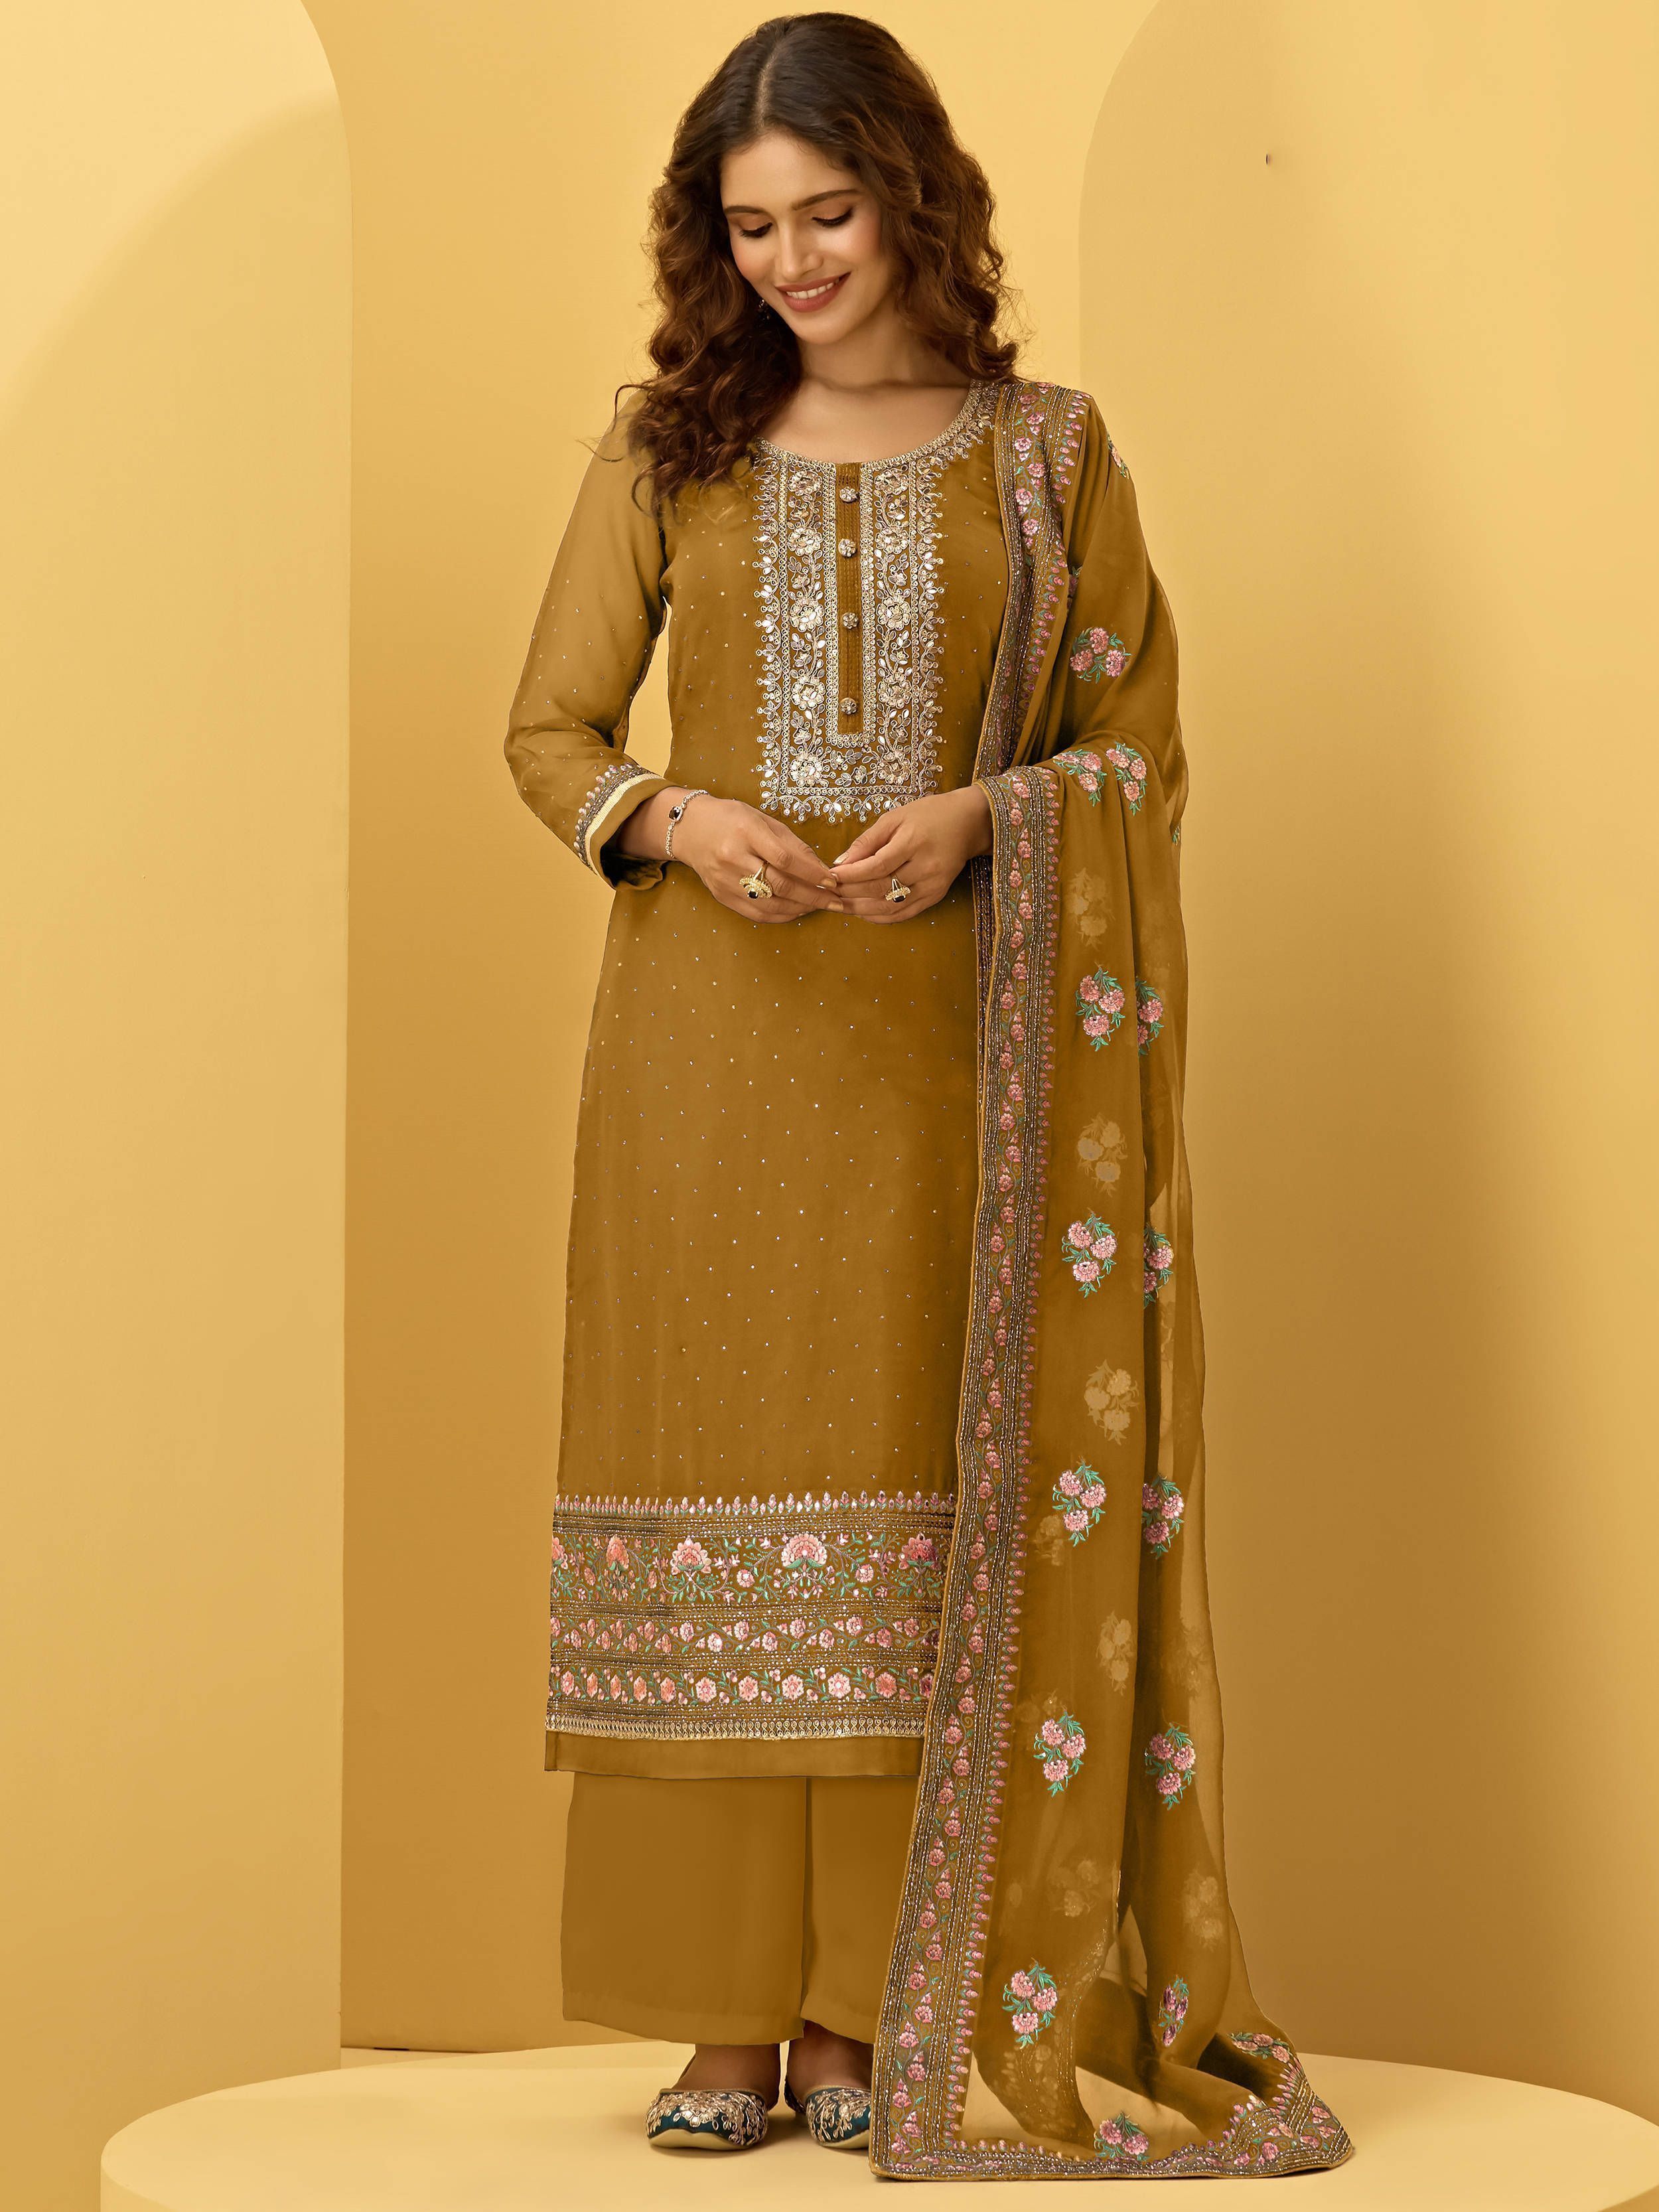 Buy DERWAFAB Women's Georgette Semi Stitched Salwar Suit In Beige Colour  SF171837 at Amazon.in